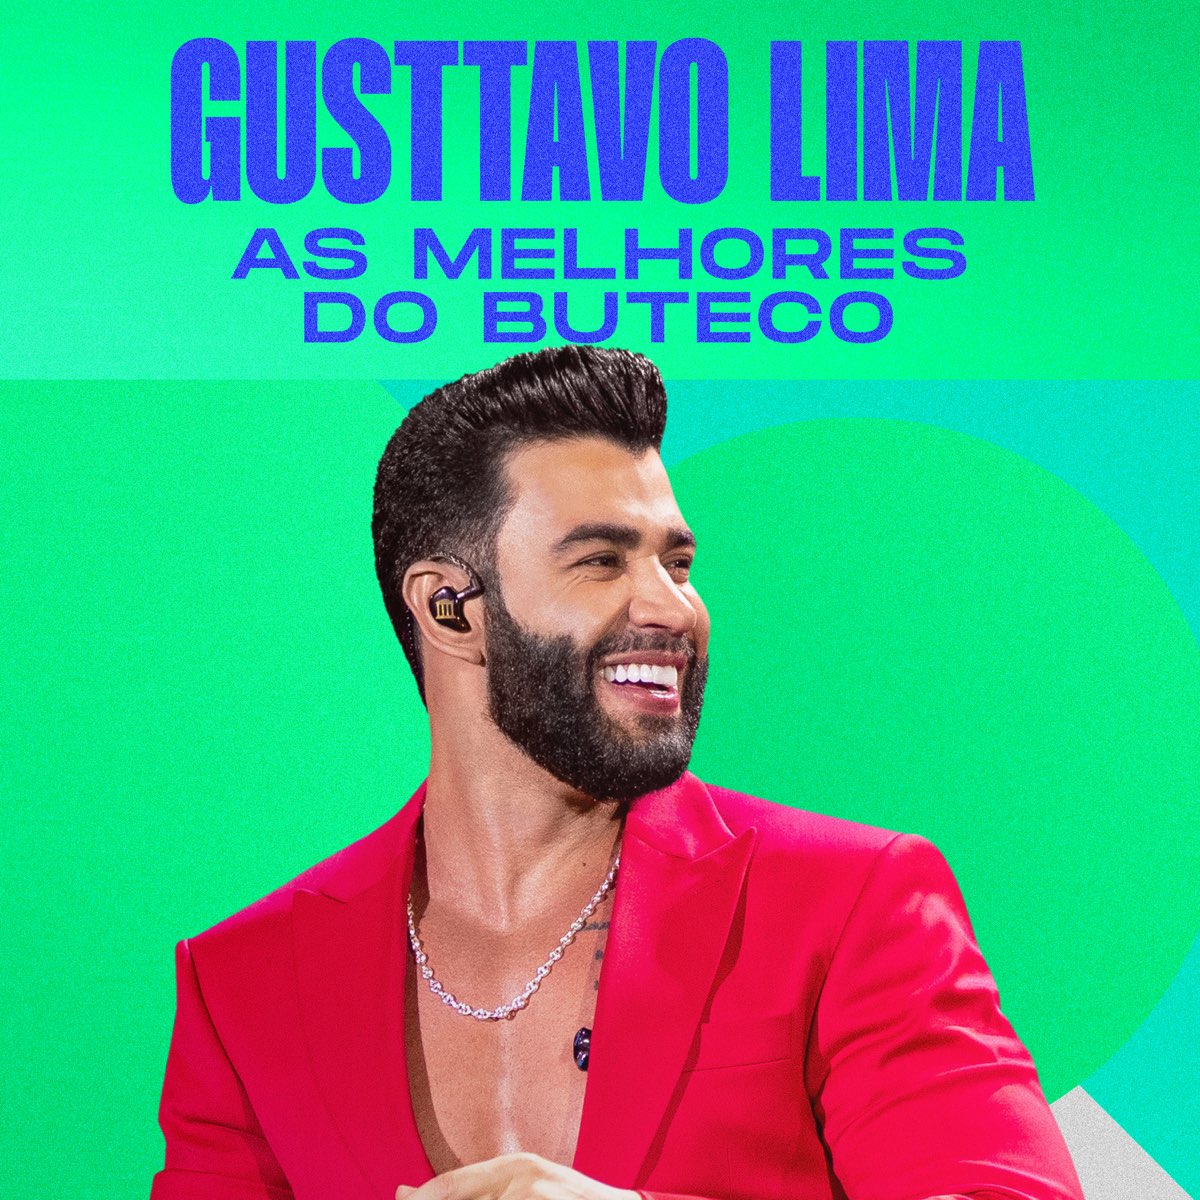 ‎Gusttavo Lima As Melhores do Buteco by Gusttavo Lima on Apple Music